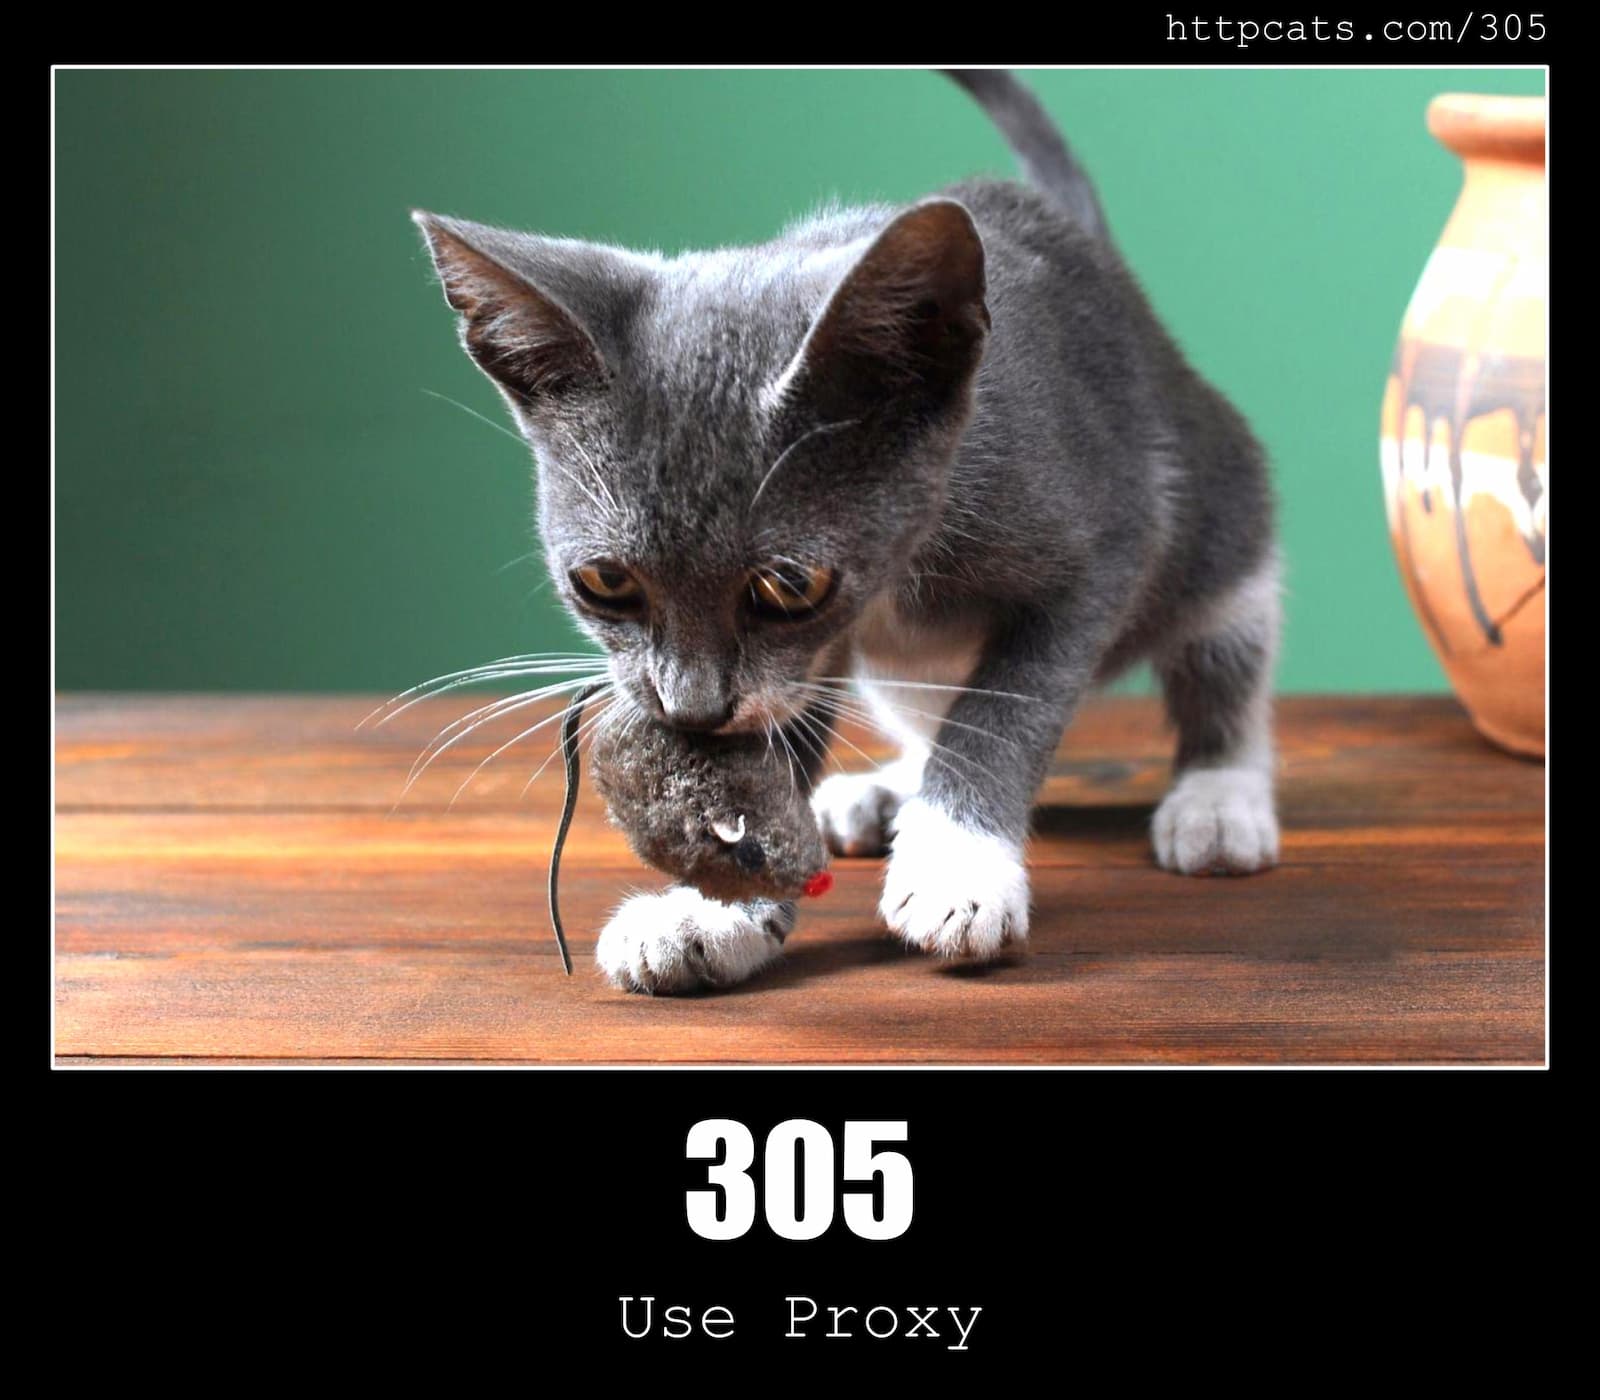 HTTP Status Code 305 Use Proxy & Cats